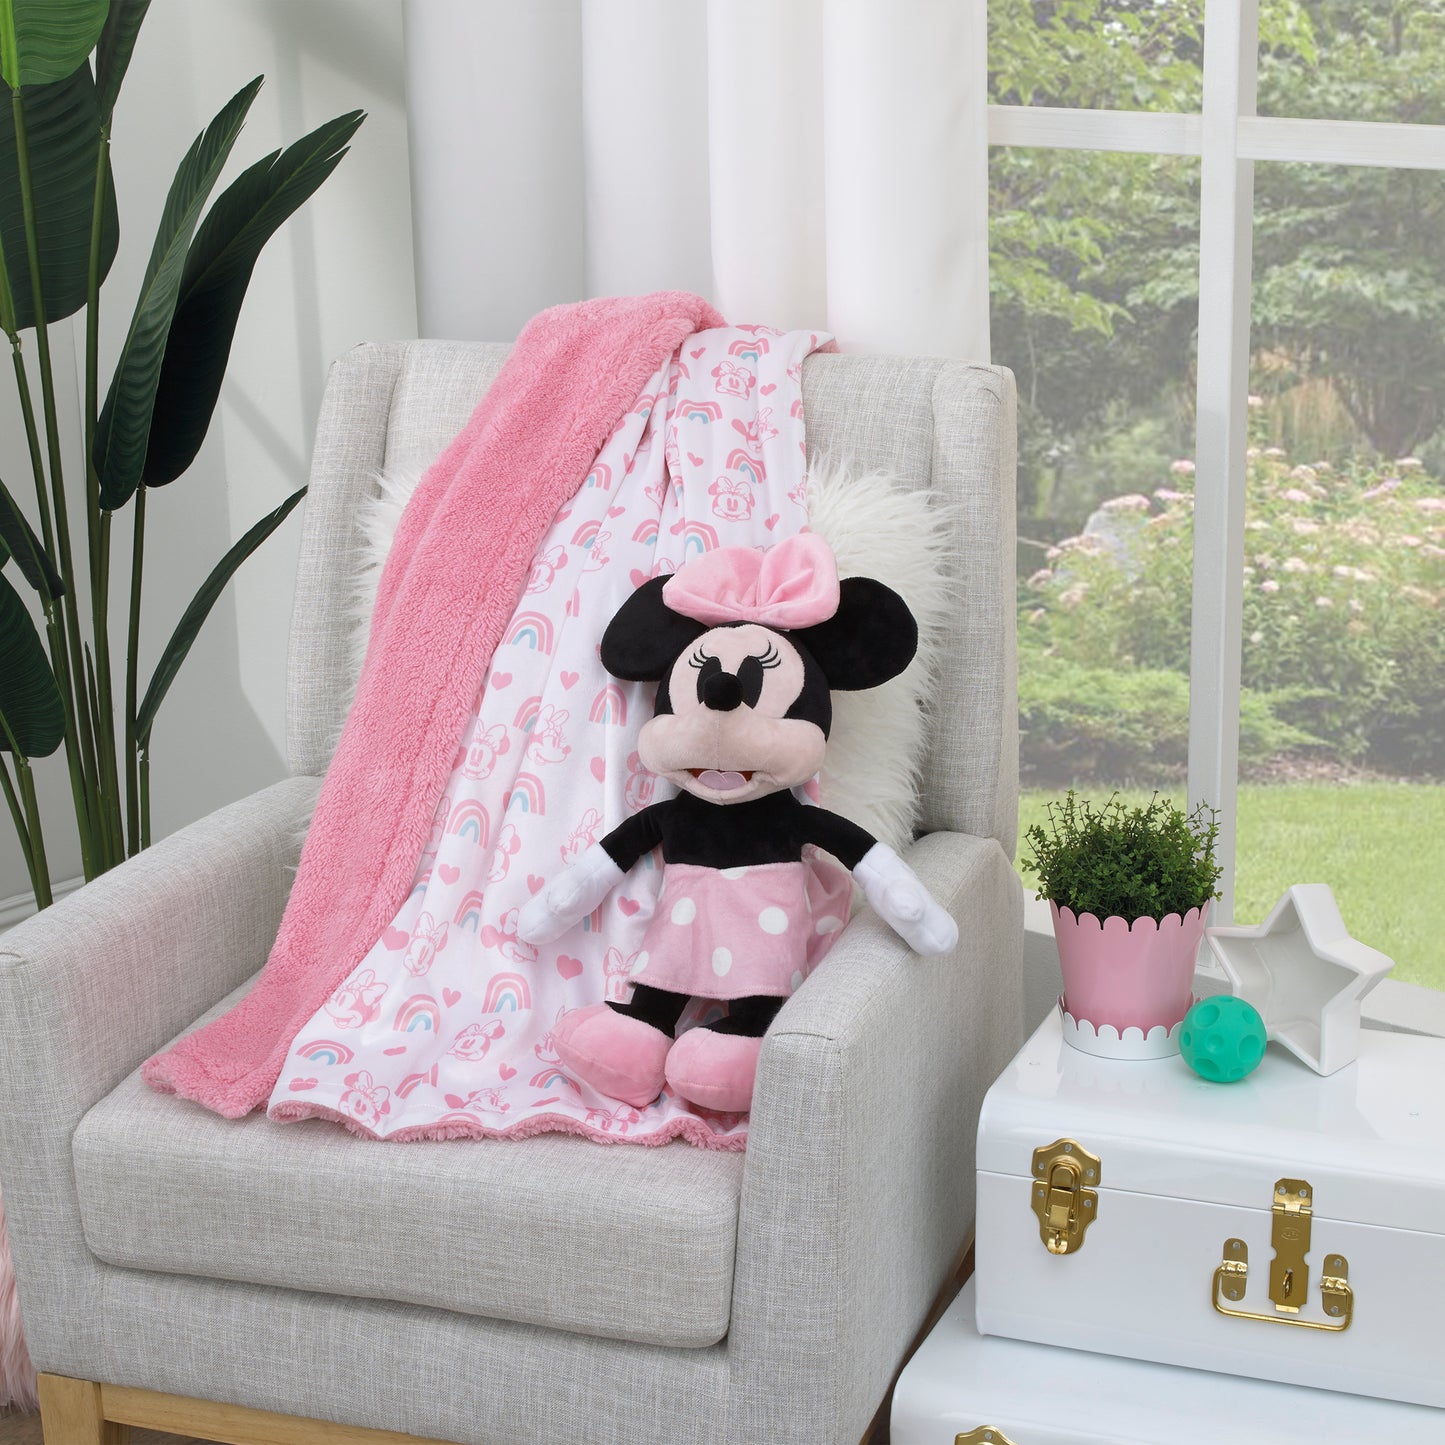 Disney Minnie Mouse Black, White, and Pink Plush